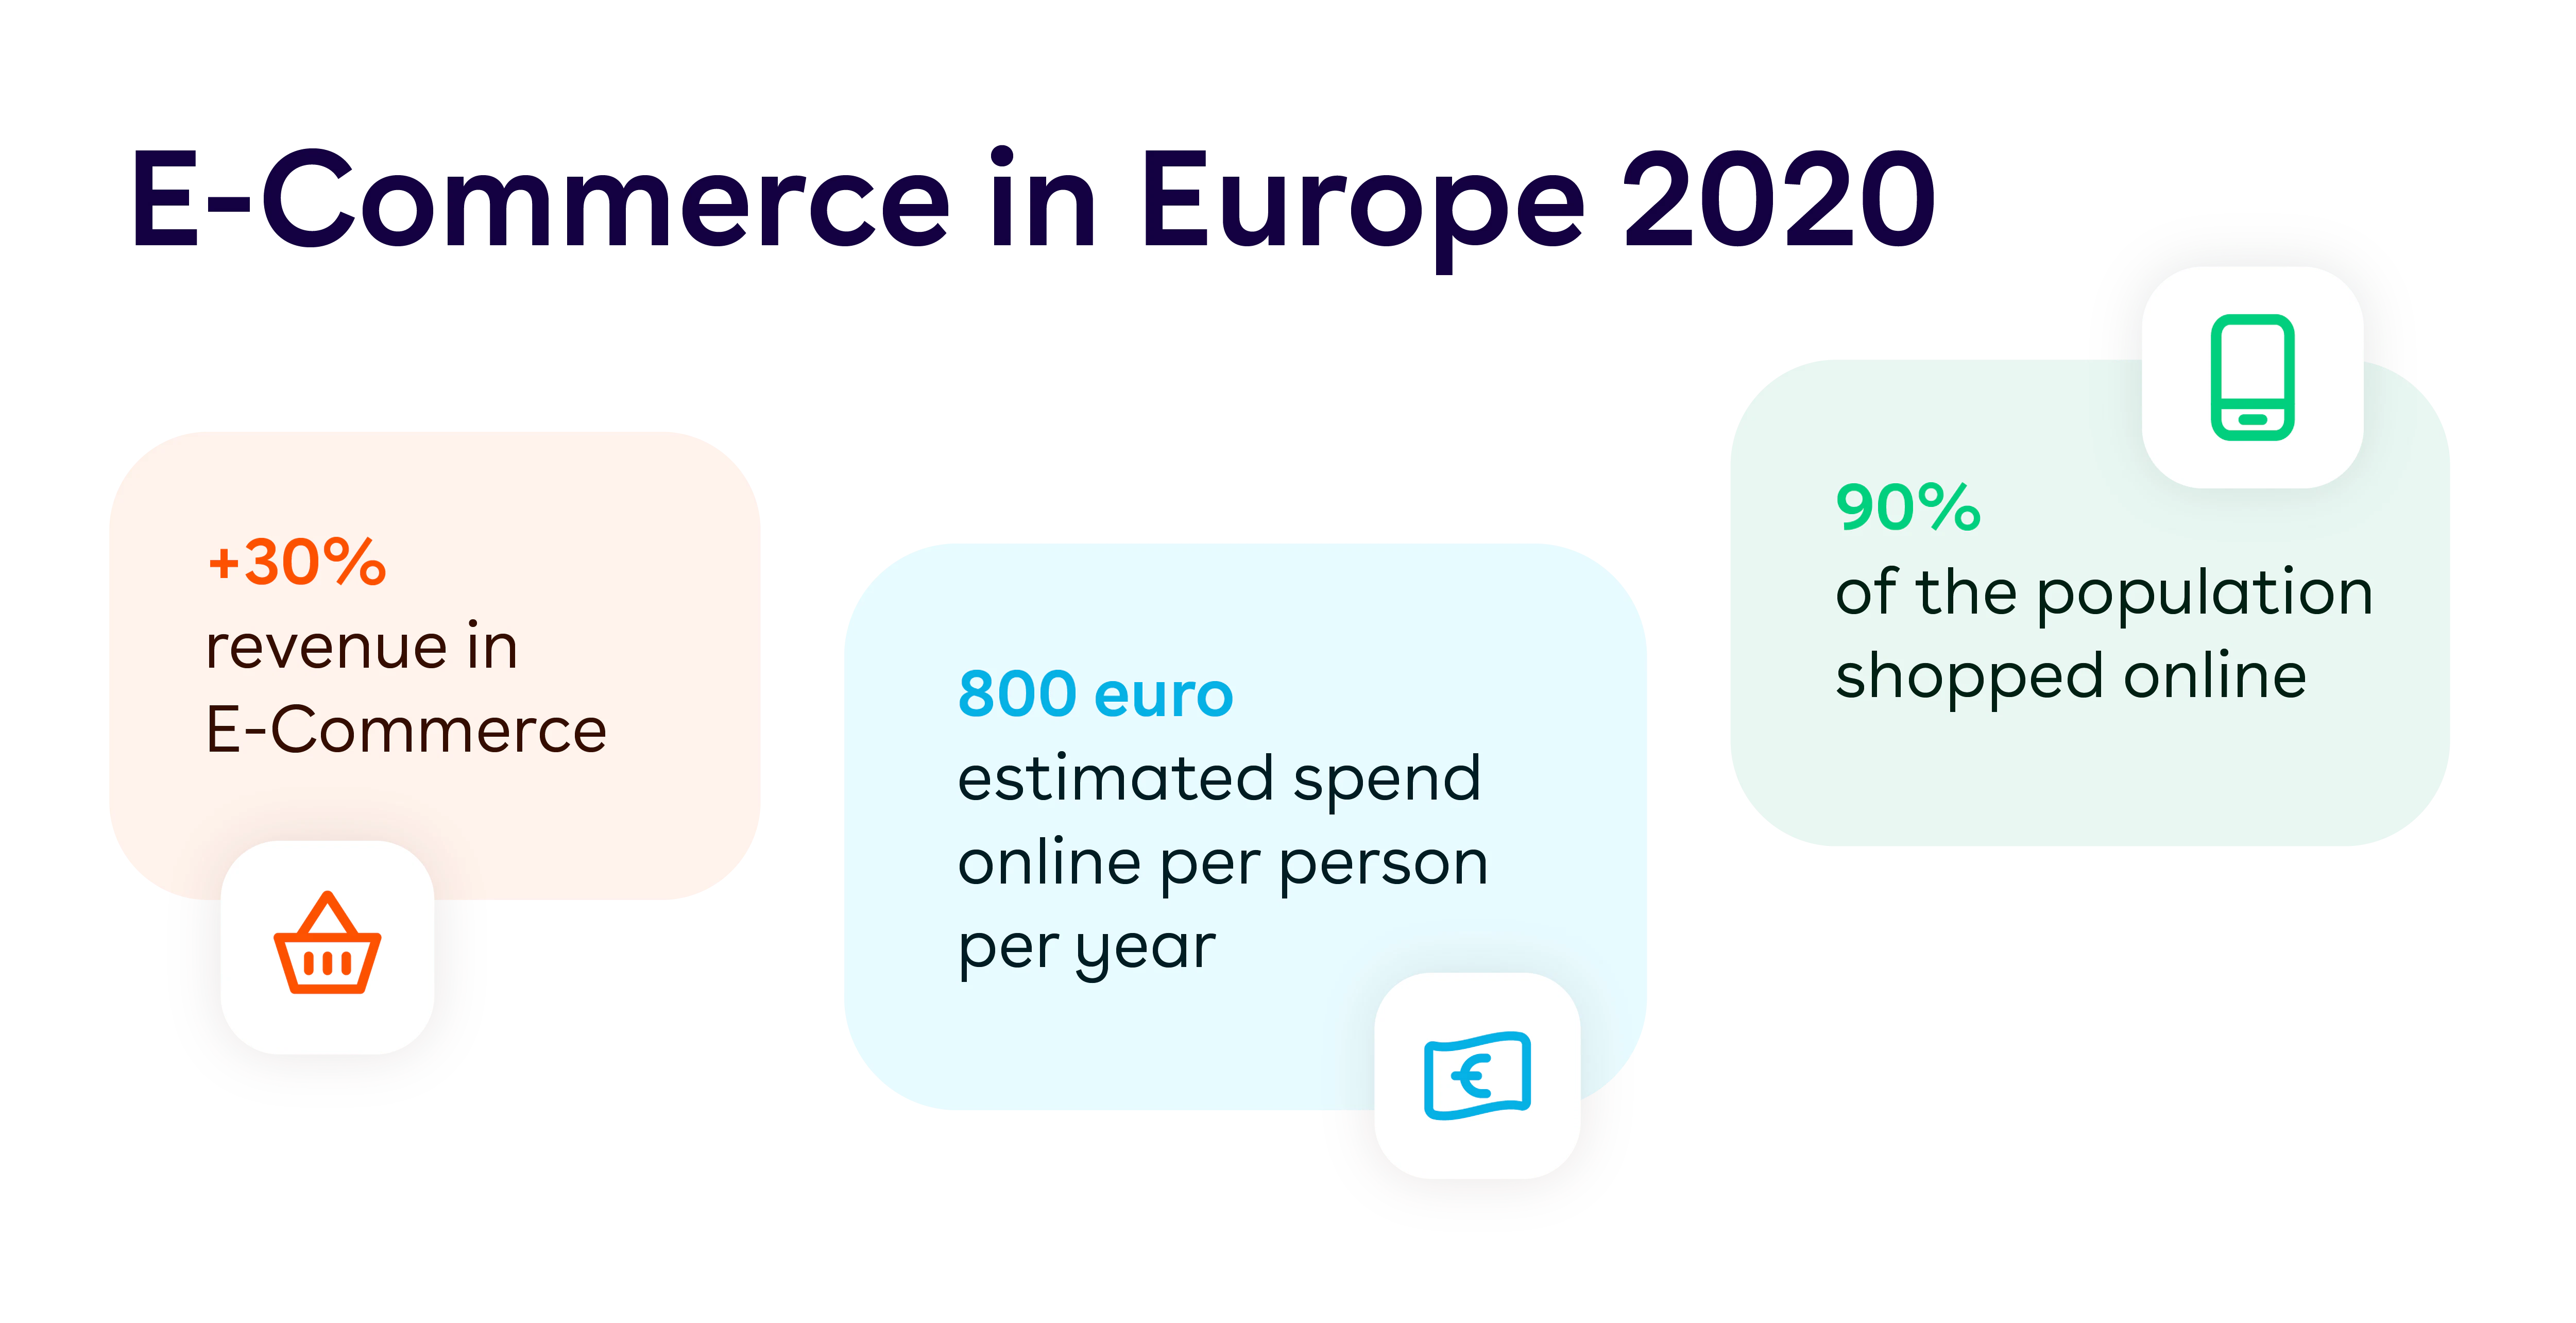 E-commerce in Europe 